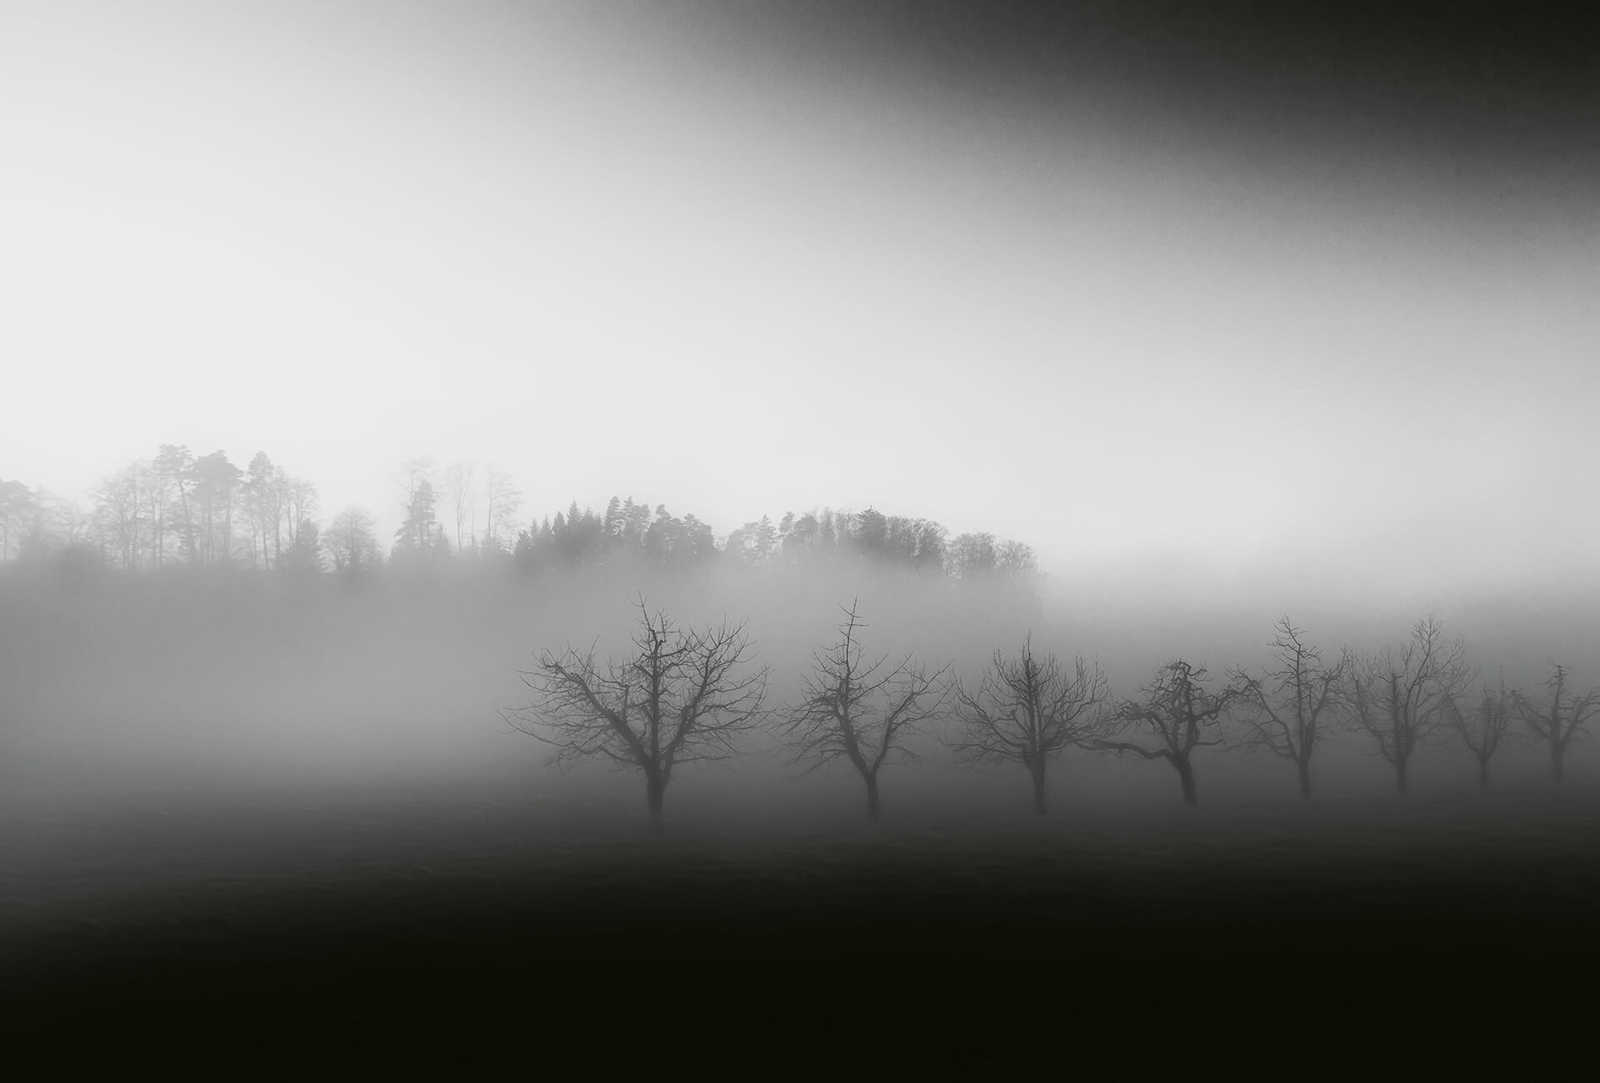 Photo wallpaper landscape with fog - black, white, grey
